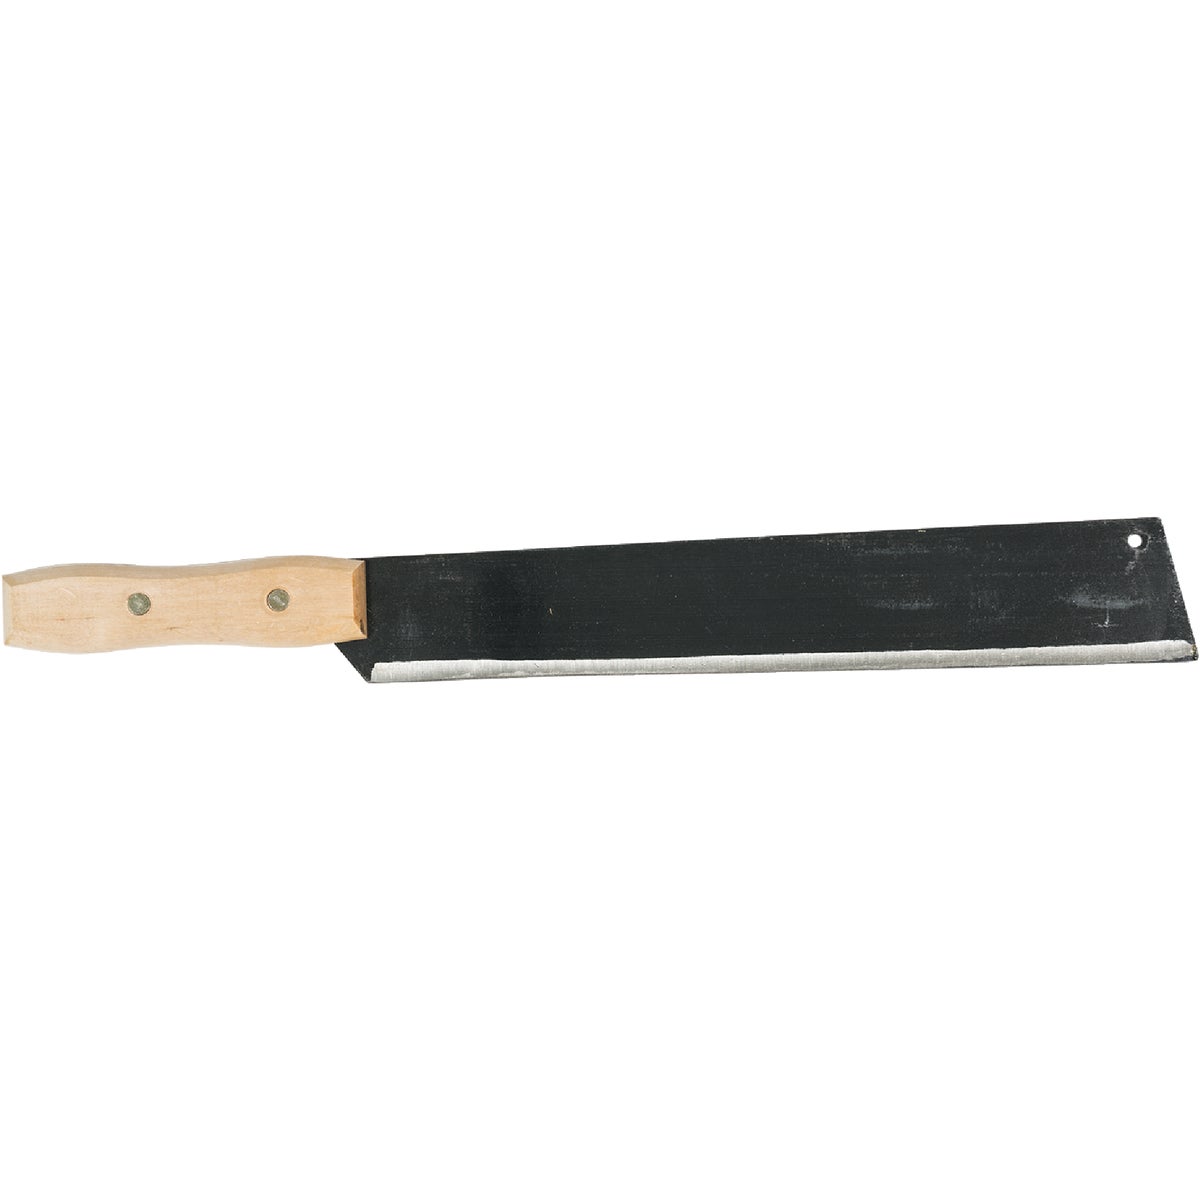 Item 706935, S400 Jobsite high carbon cutlery flexible steel wide resharpenable blade is